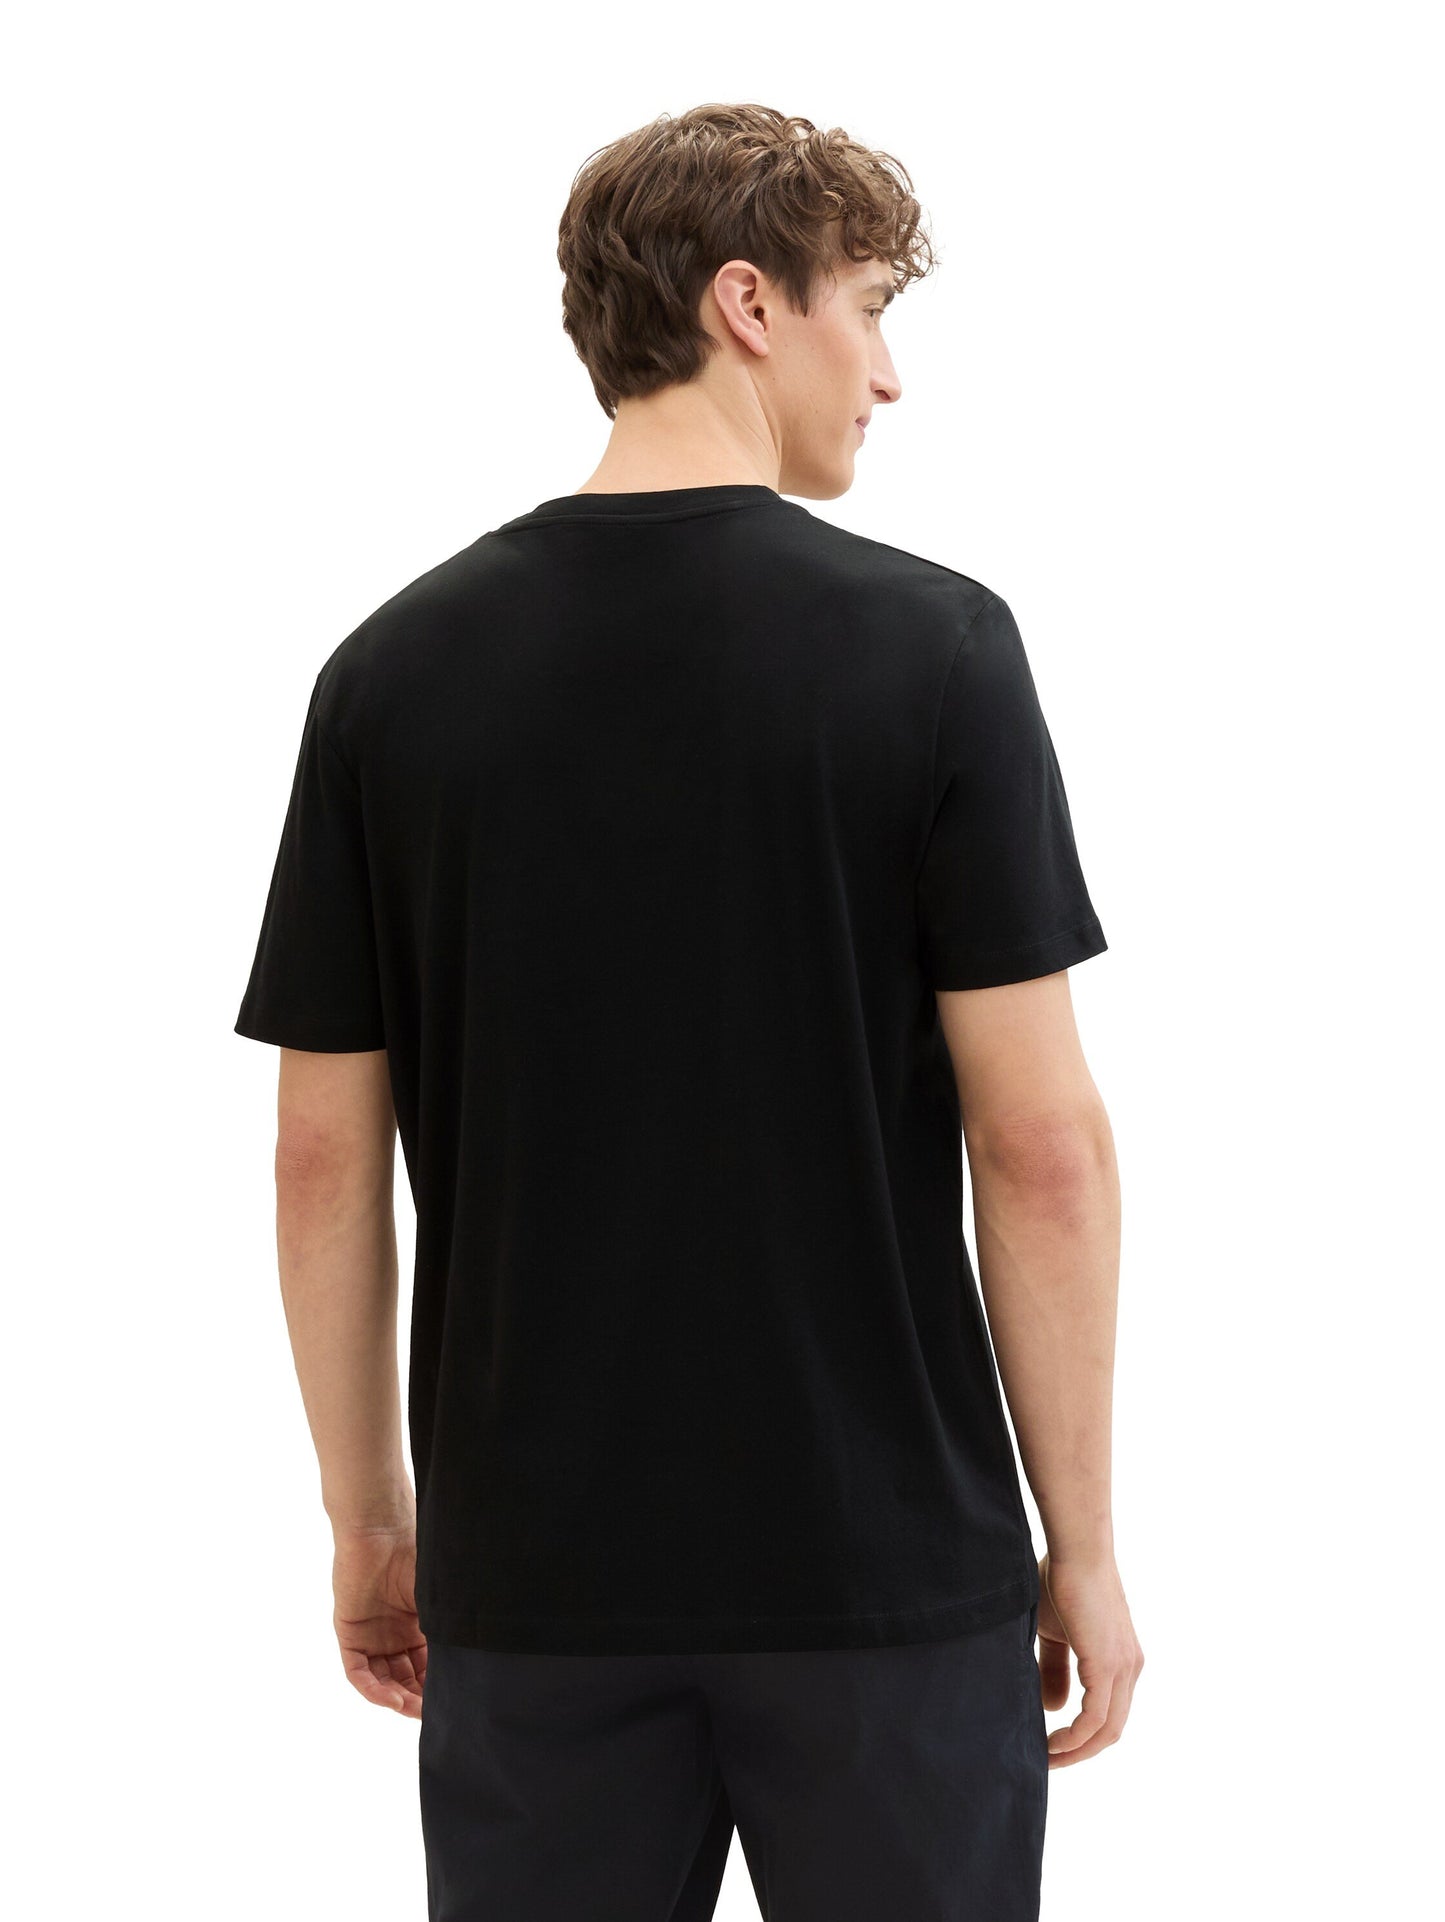 T-Shirt mit Motivprint (Black)